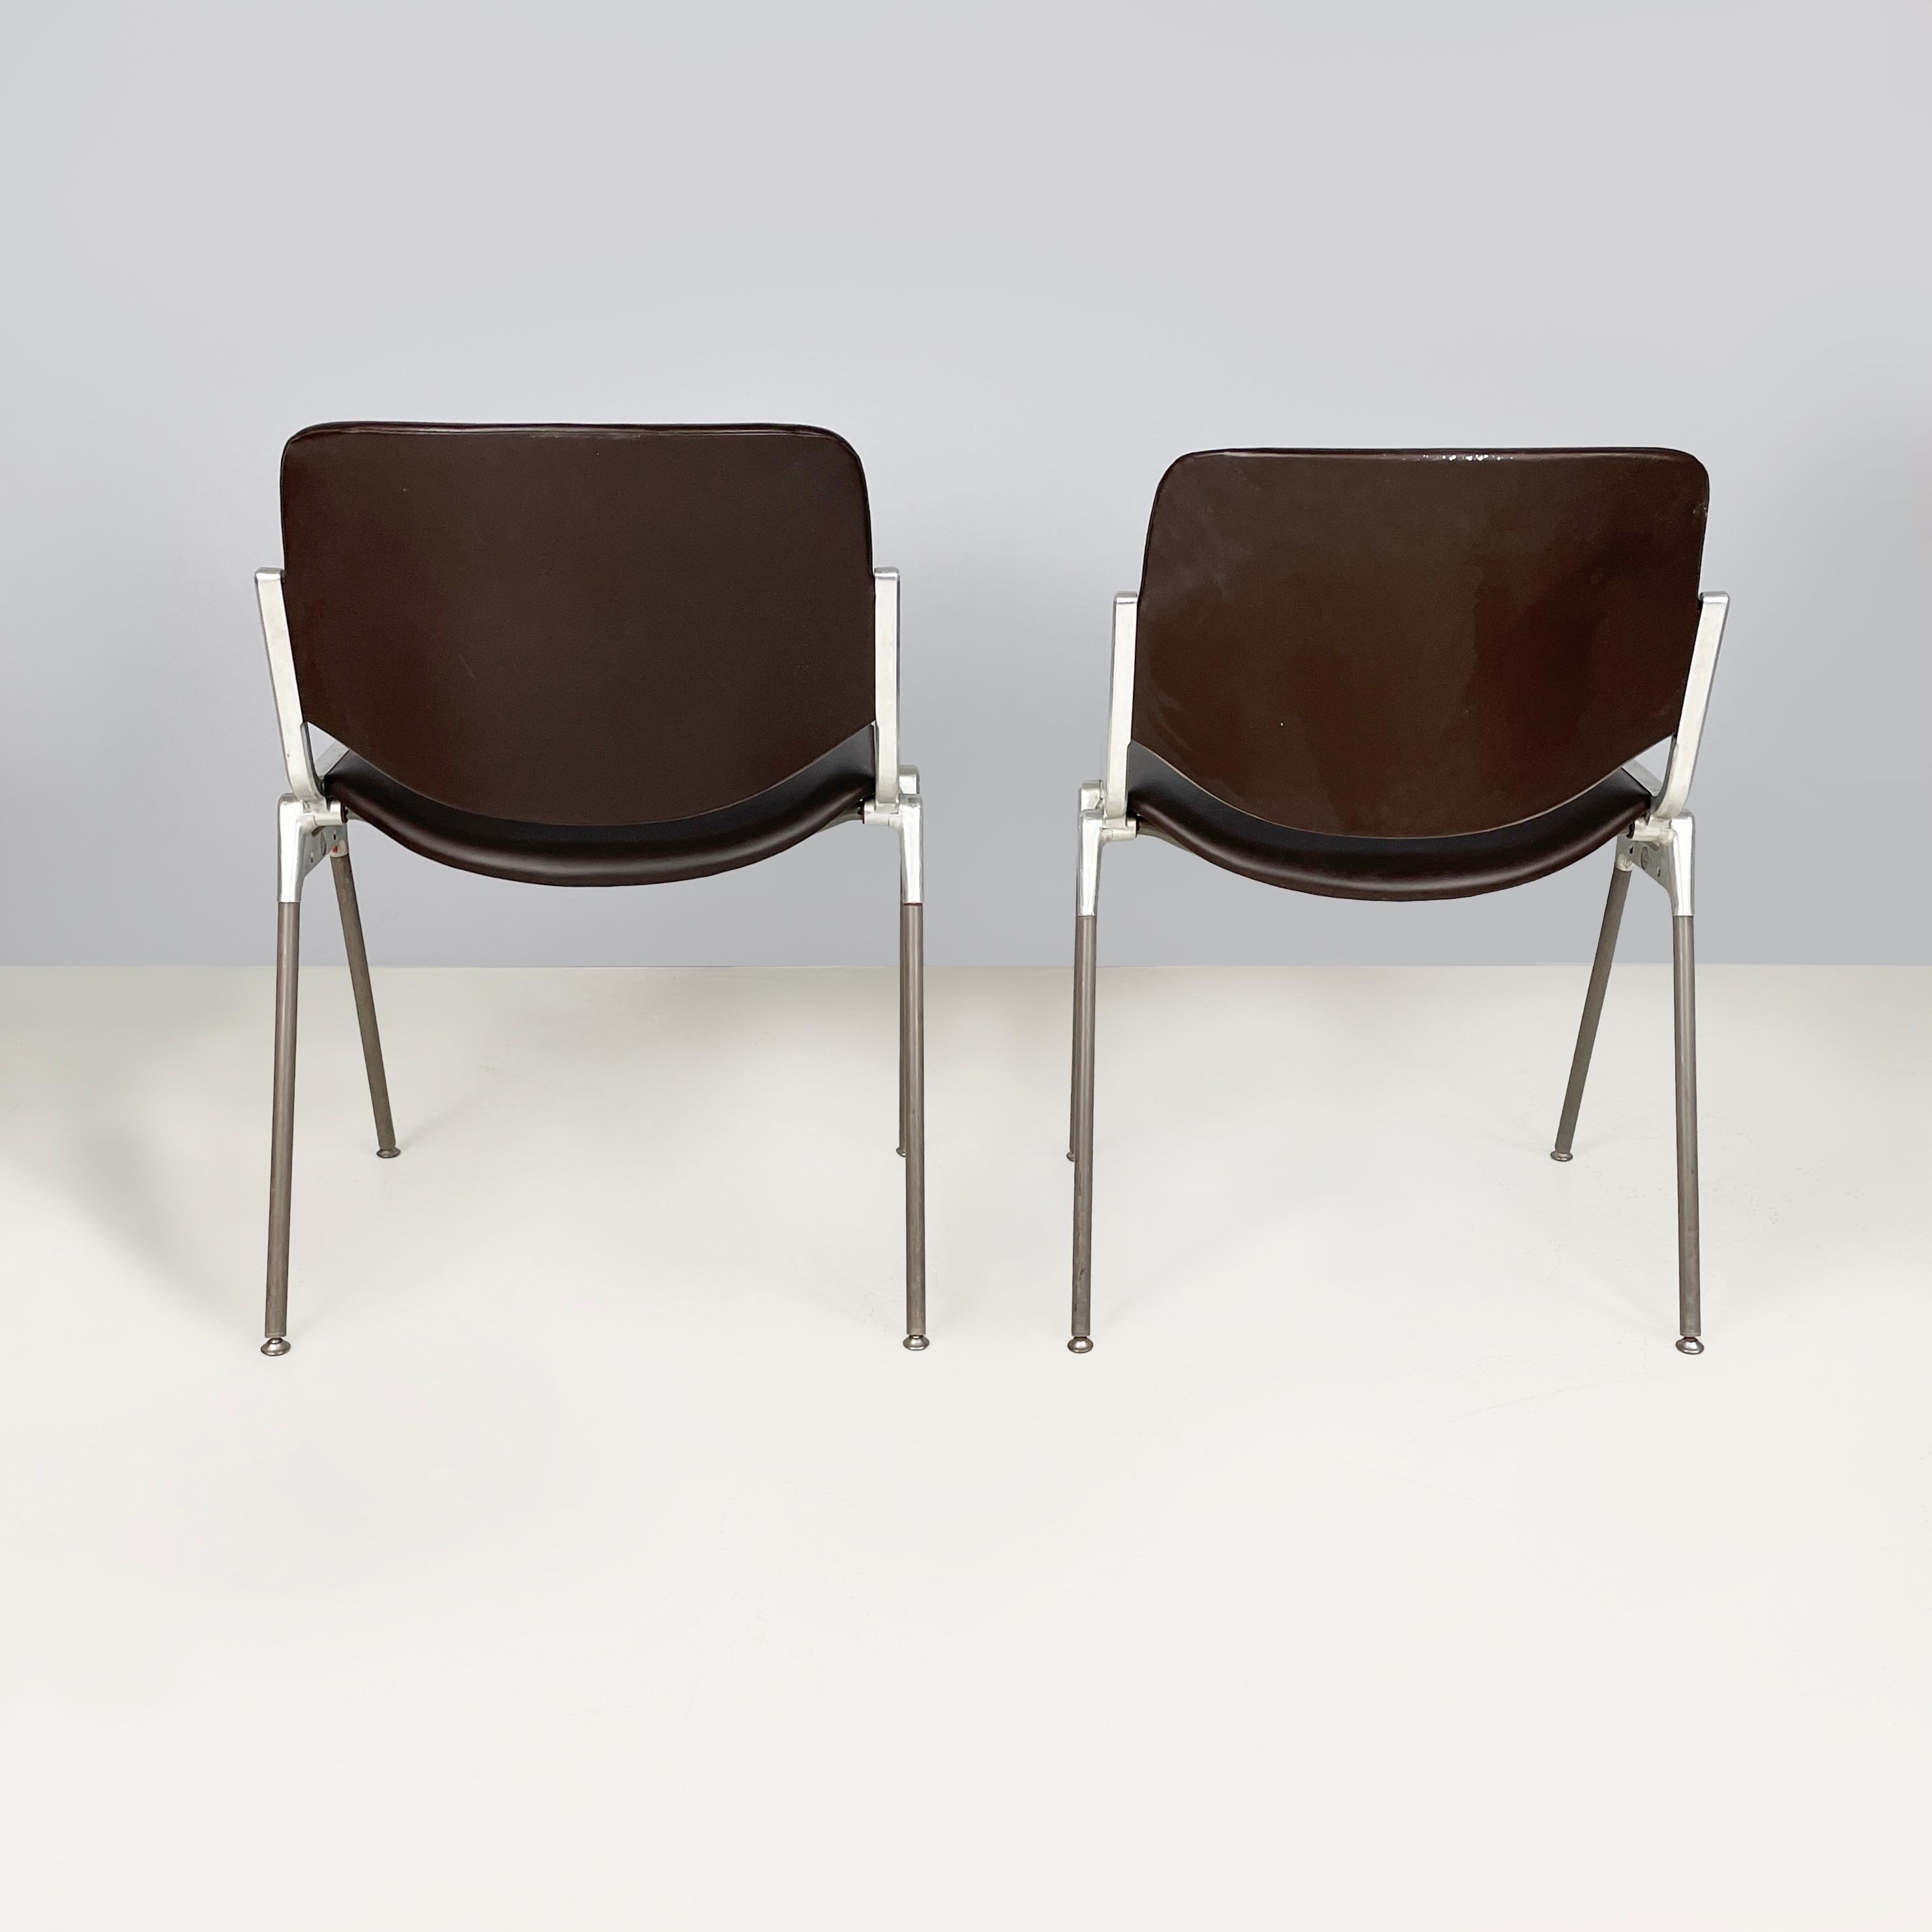 Late 20th Century Italian modern Chairs DSC by Giancarlo Piretti for Anonima Castelli, 1970s For Sale